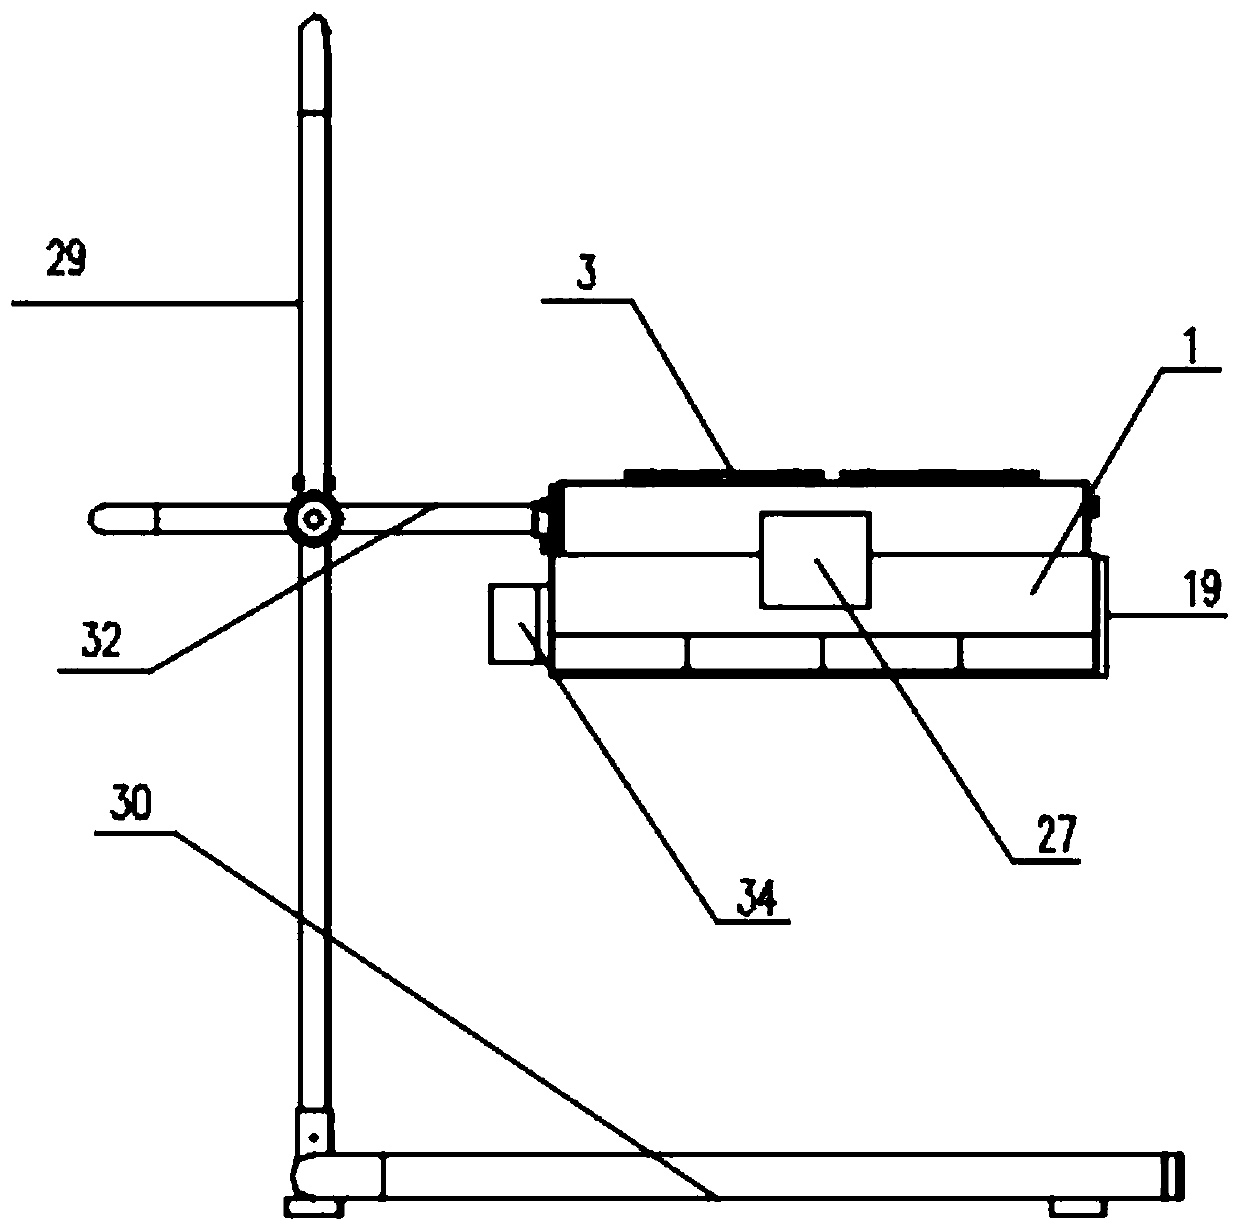 Portable lampblack filter, lampblack filtering method and application